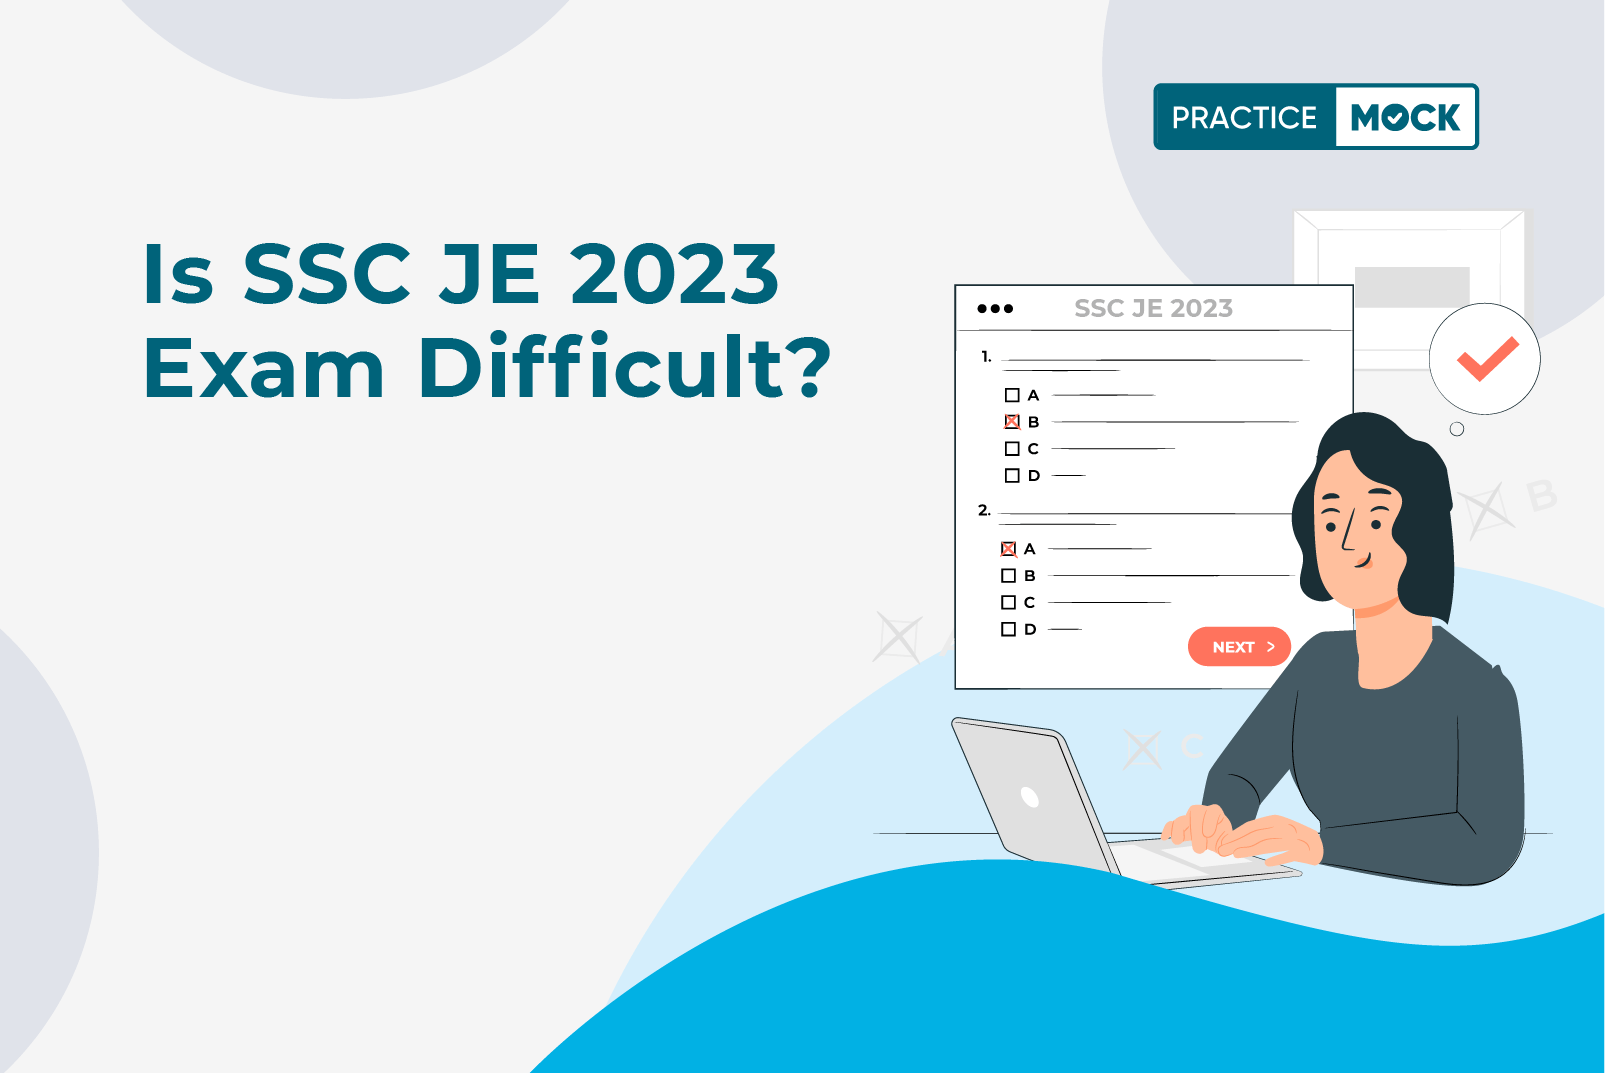 FI_SSC_JE_Exam_Difficult_050523